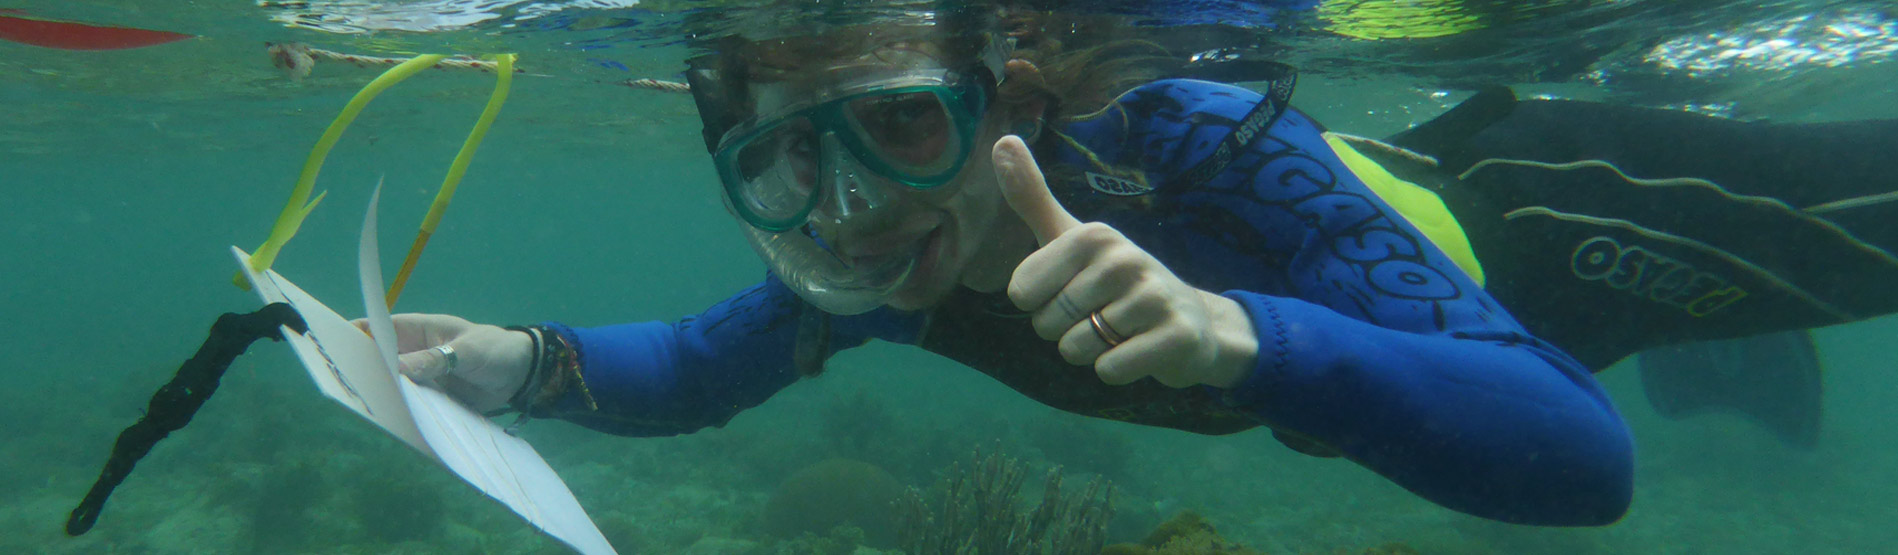 Student Snorkeling in Puerto Rico